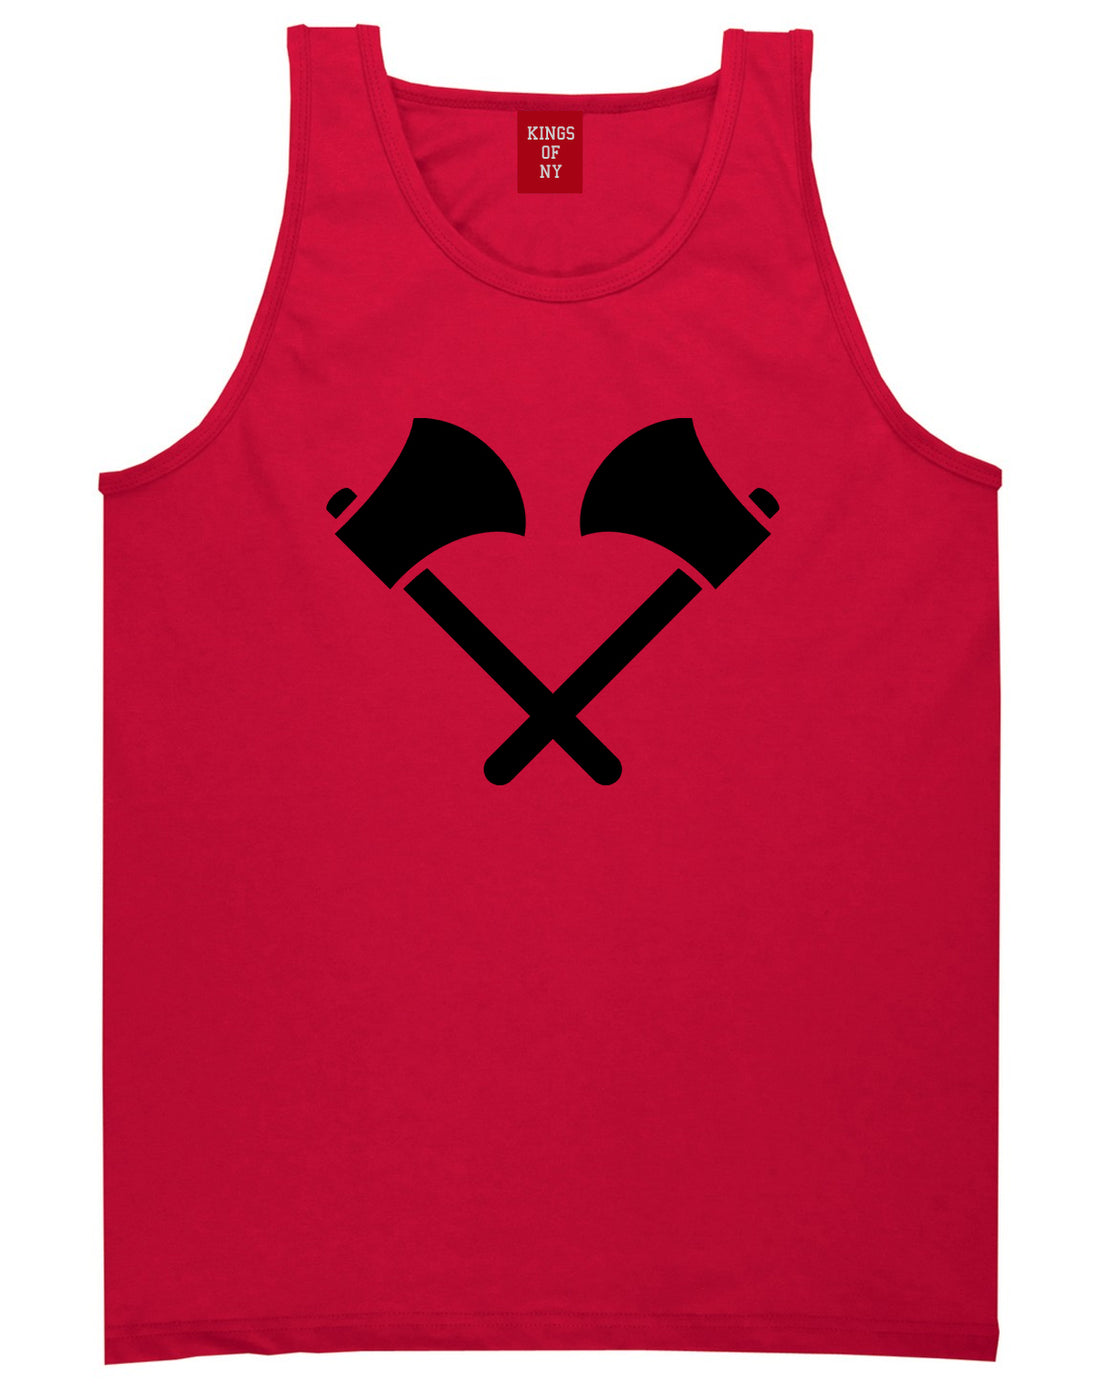 2 Ax Fireman Logo Red Tank Top Shirt by Kings Of NY